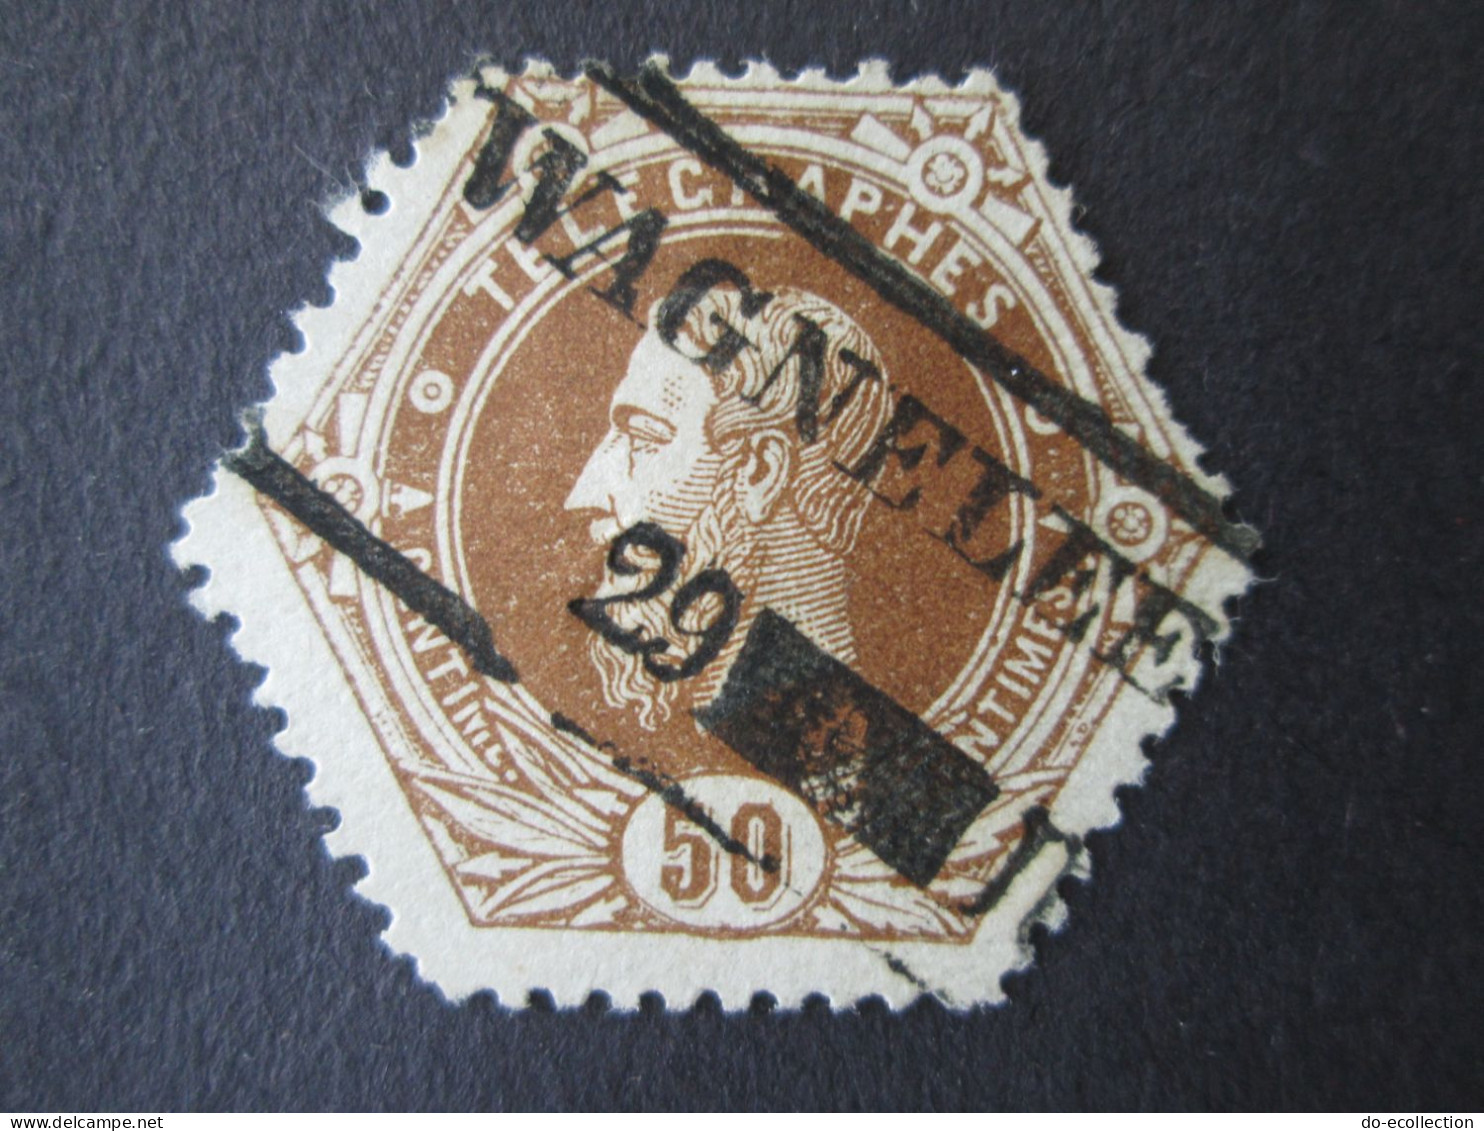 BELGIQUE Timbre Télégraphe 1871 50c WAGNELEE Leopold II Belgie Belgium Timbre Stamp - Francobolli Telegrafici [TG]